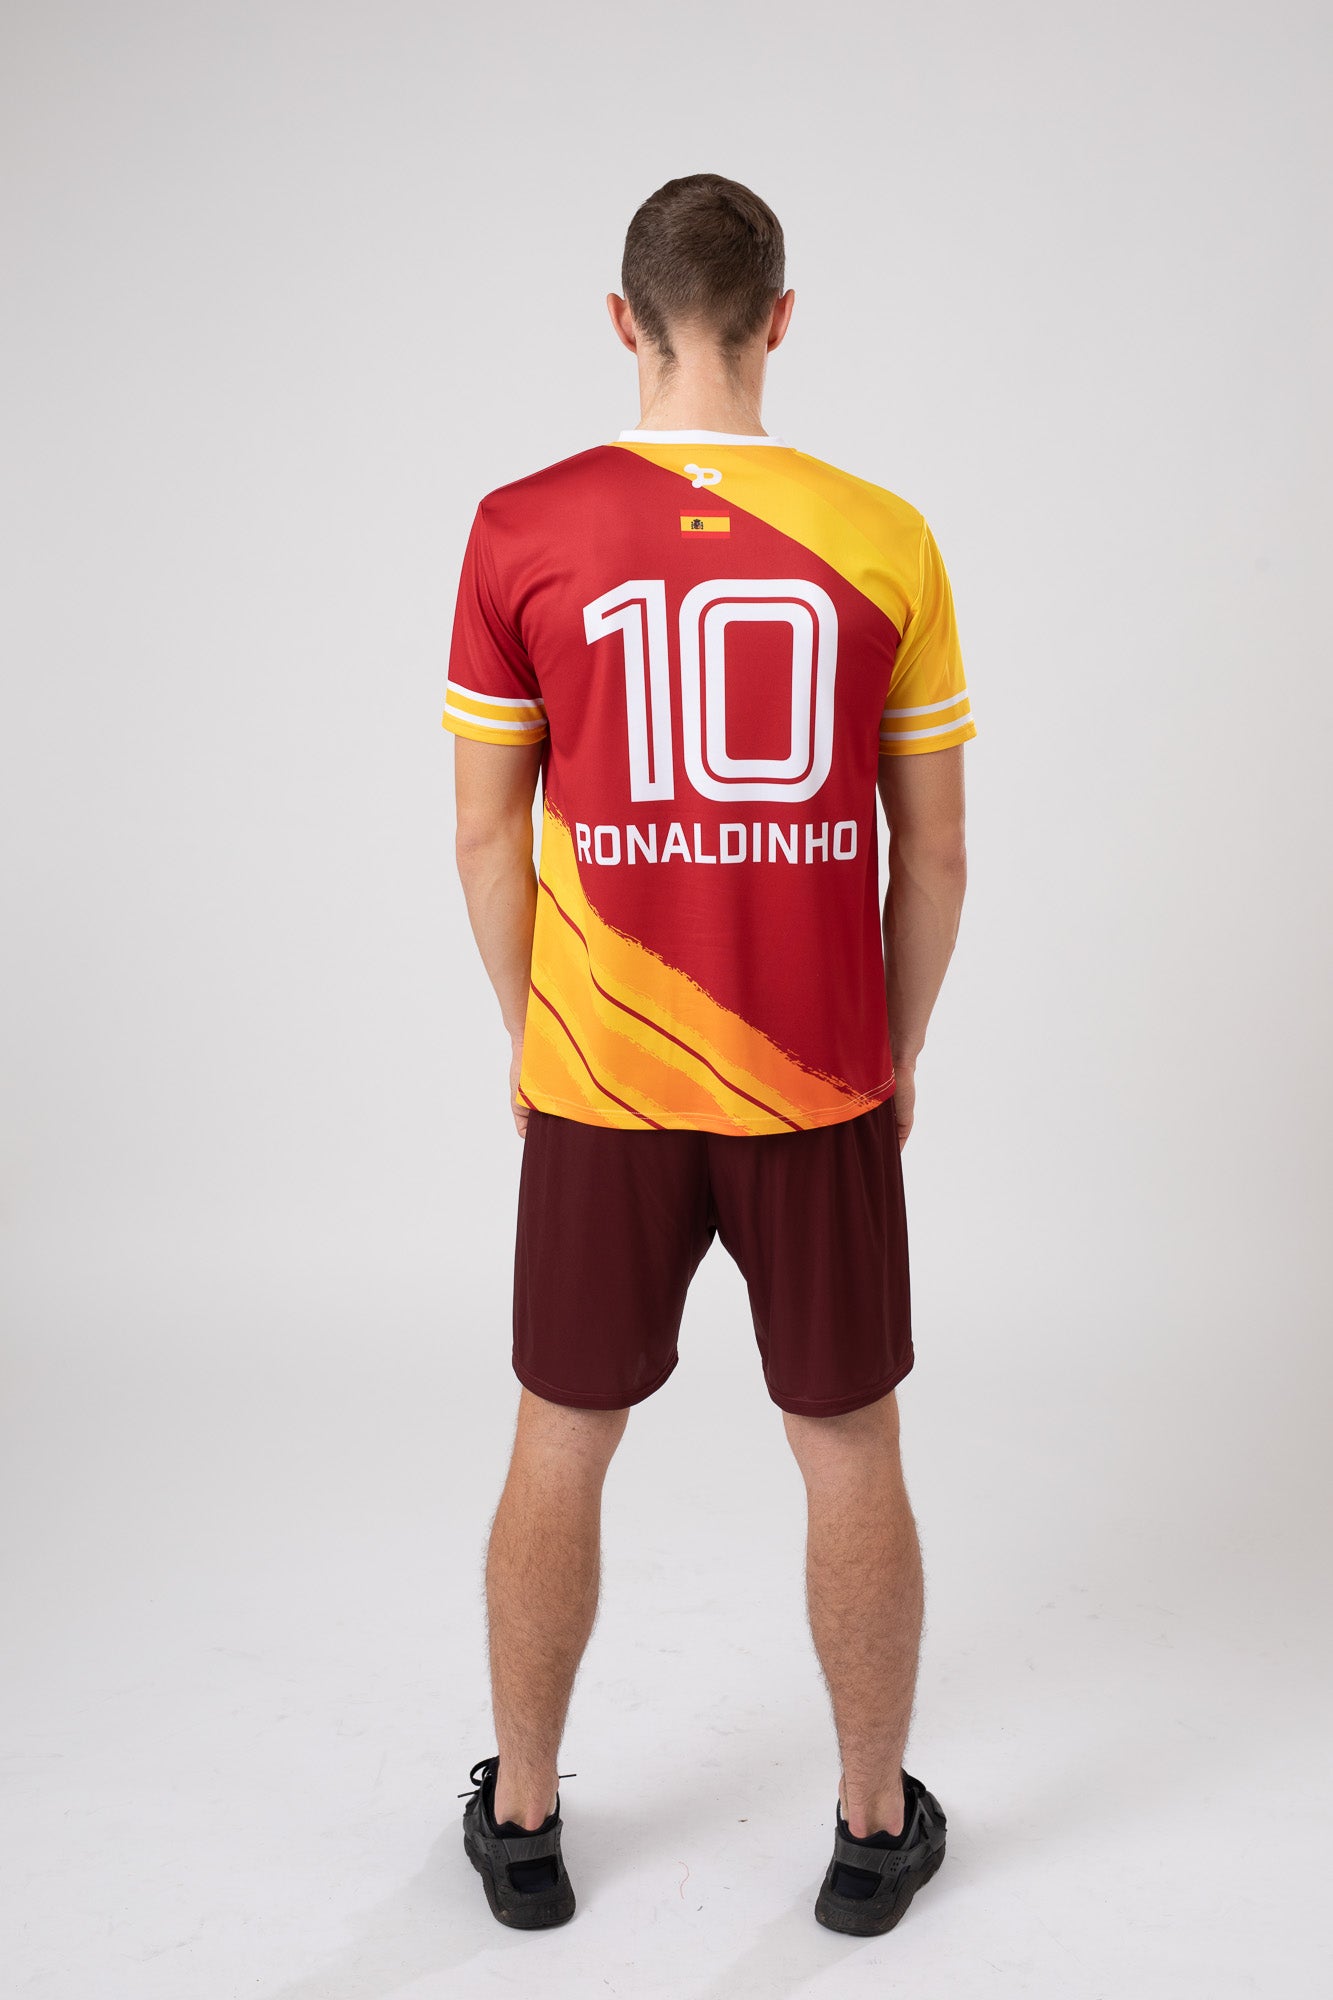 Ronaldinho Spain Jersey/Camisa Replica